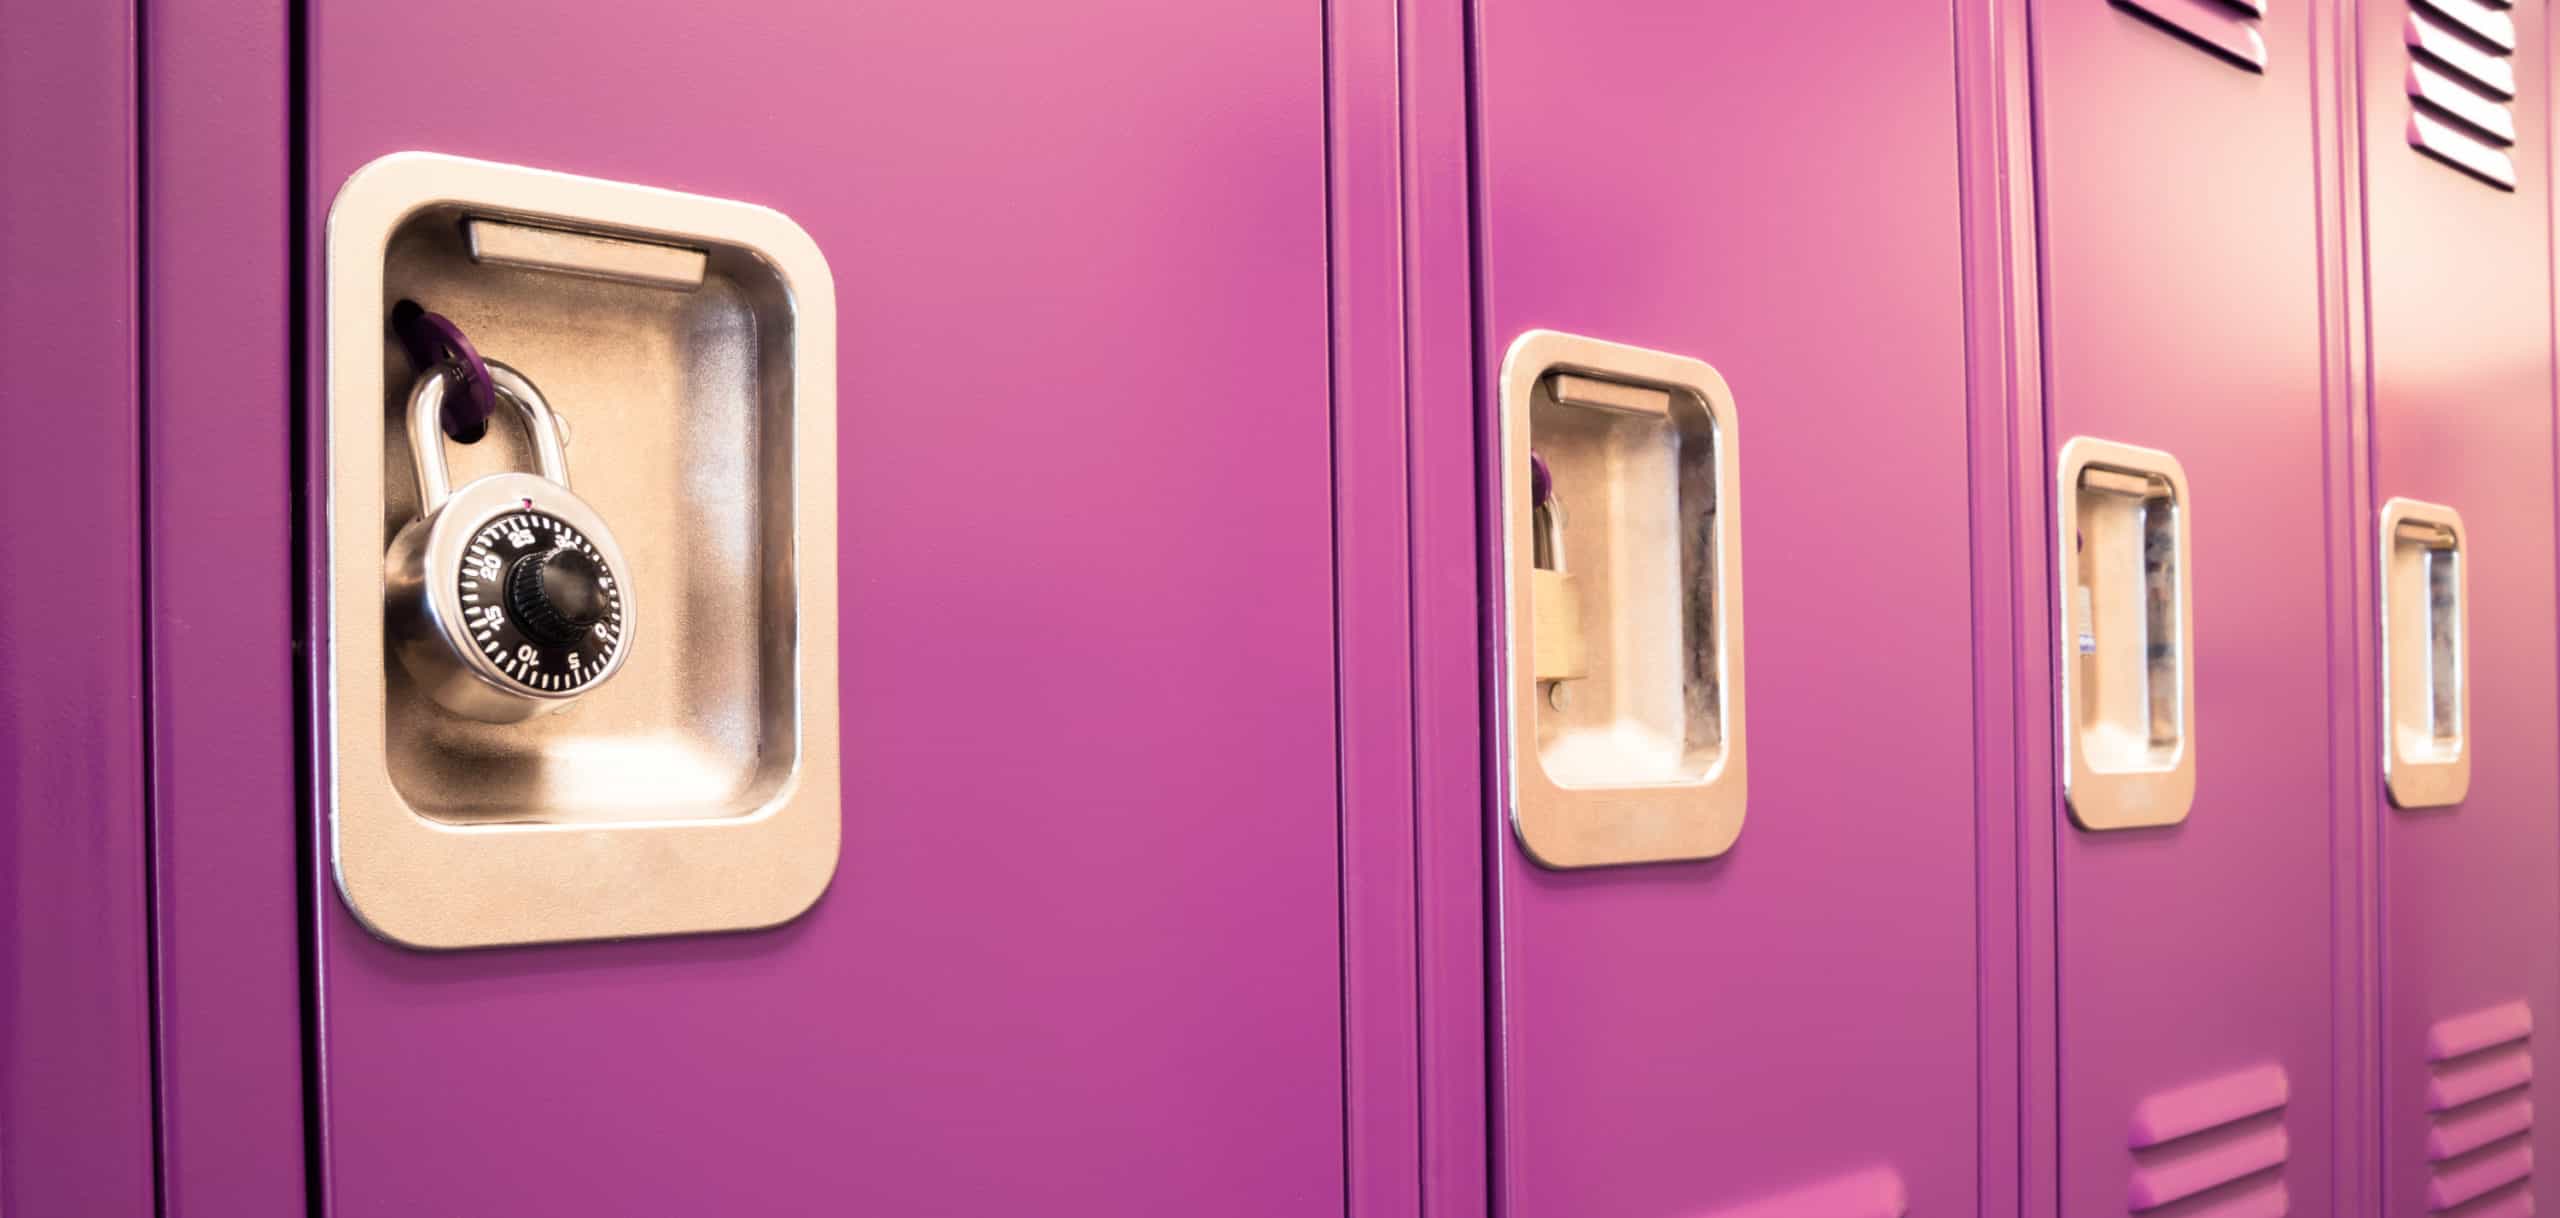 Purple school locker with MasterLock dial lock securing stuff like LastPass secures passwords